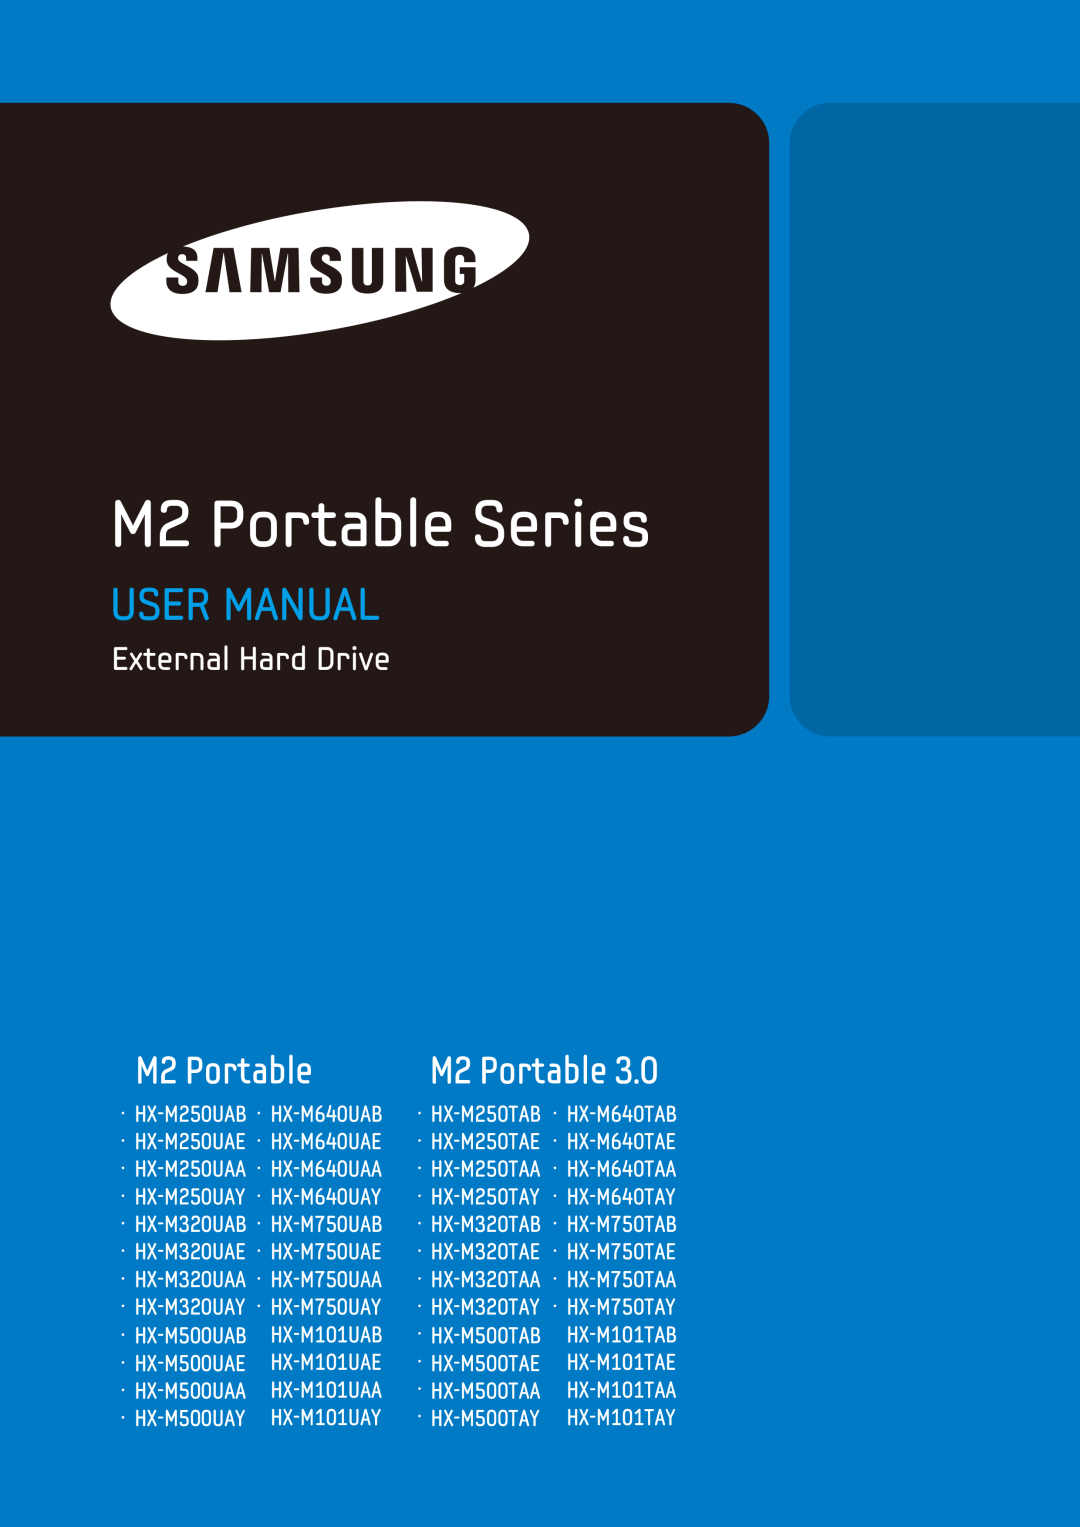 Samsung HX-M500UAE, HX-M500UAY, HX-M500UAB, HX-M640UAE, HX-M250UAB user manual M2 Portable Series, External Hard Drive 